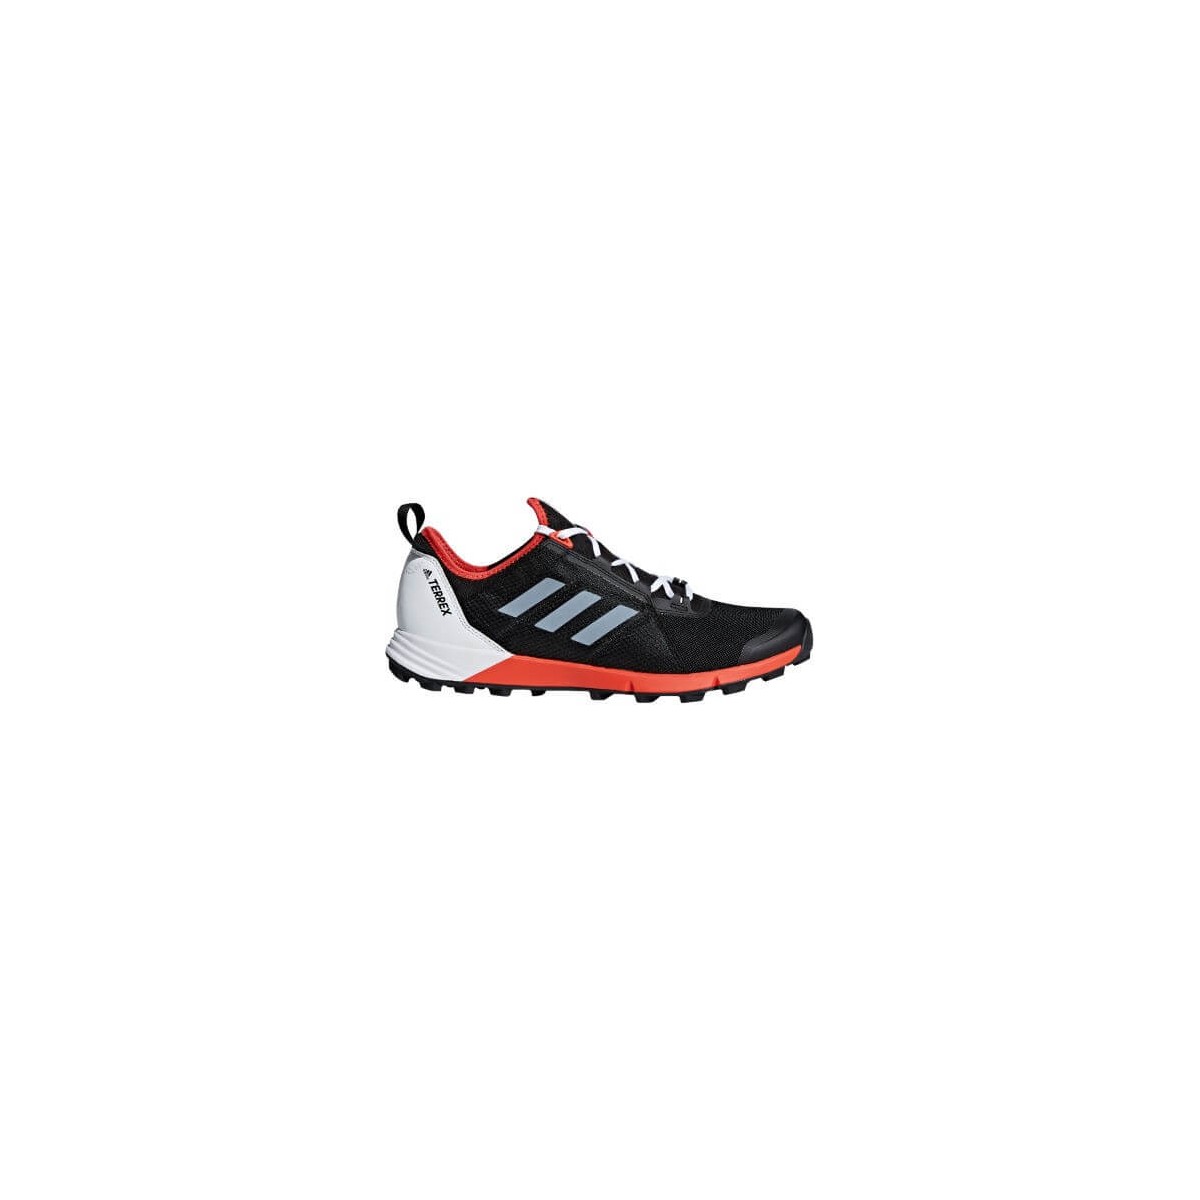 Adidas Speed Black / AW18